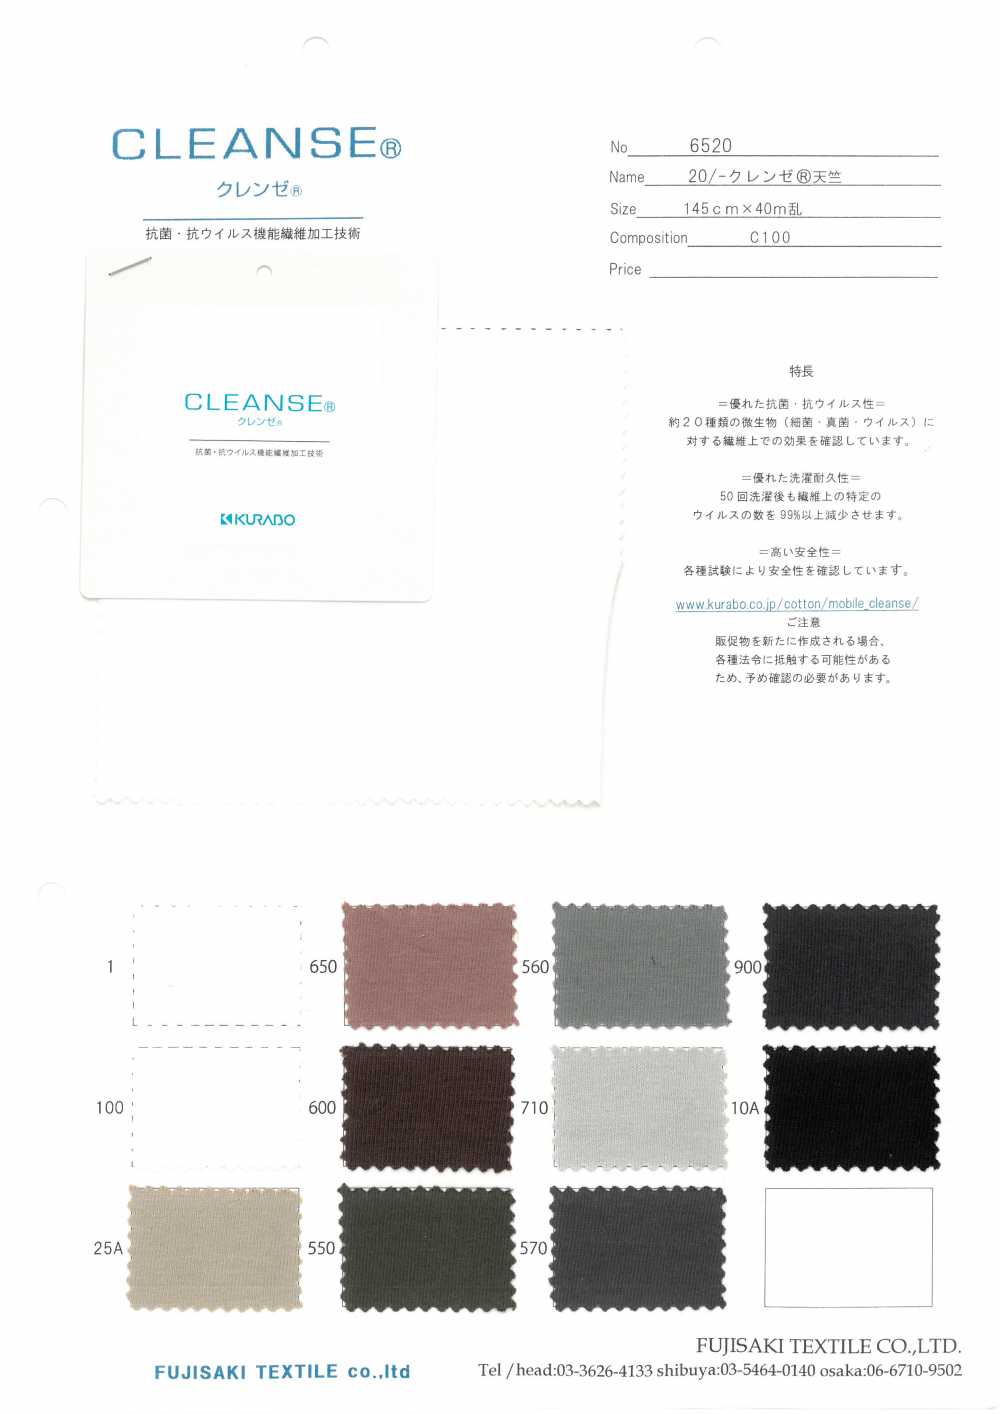 6520 20 / CLEANSE Tianzhu Algodón[Fabrica Textil] Fujisaki Textile